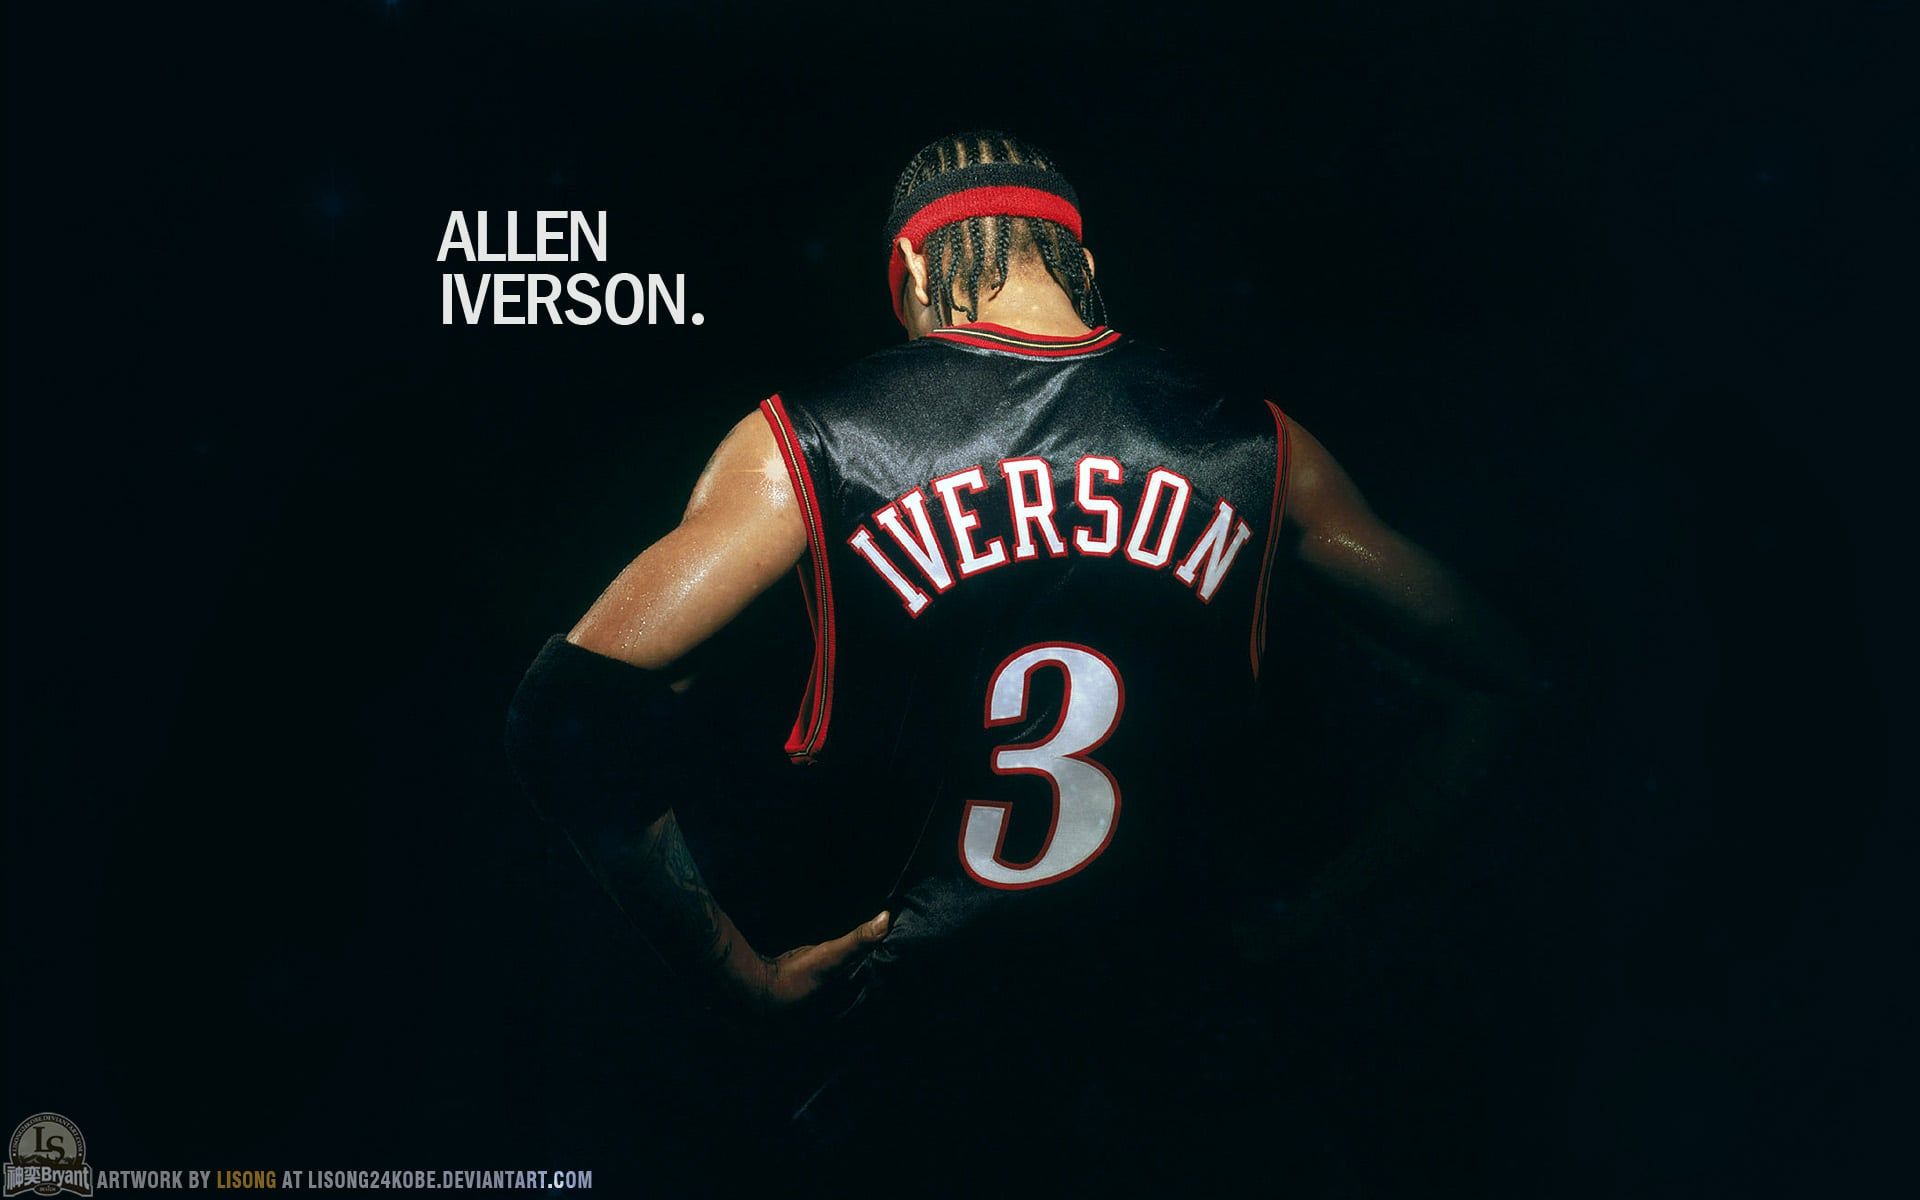 Allen Iverson Wallpaper. Allen Iverson NBA Wallpaper, Allen Iverson Wallpaper and Allen Iverson Basketball Wallpaper